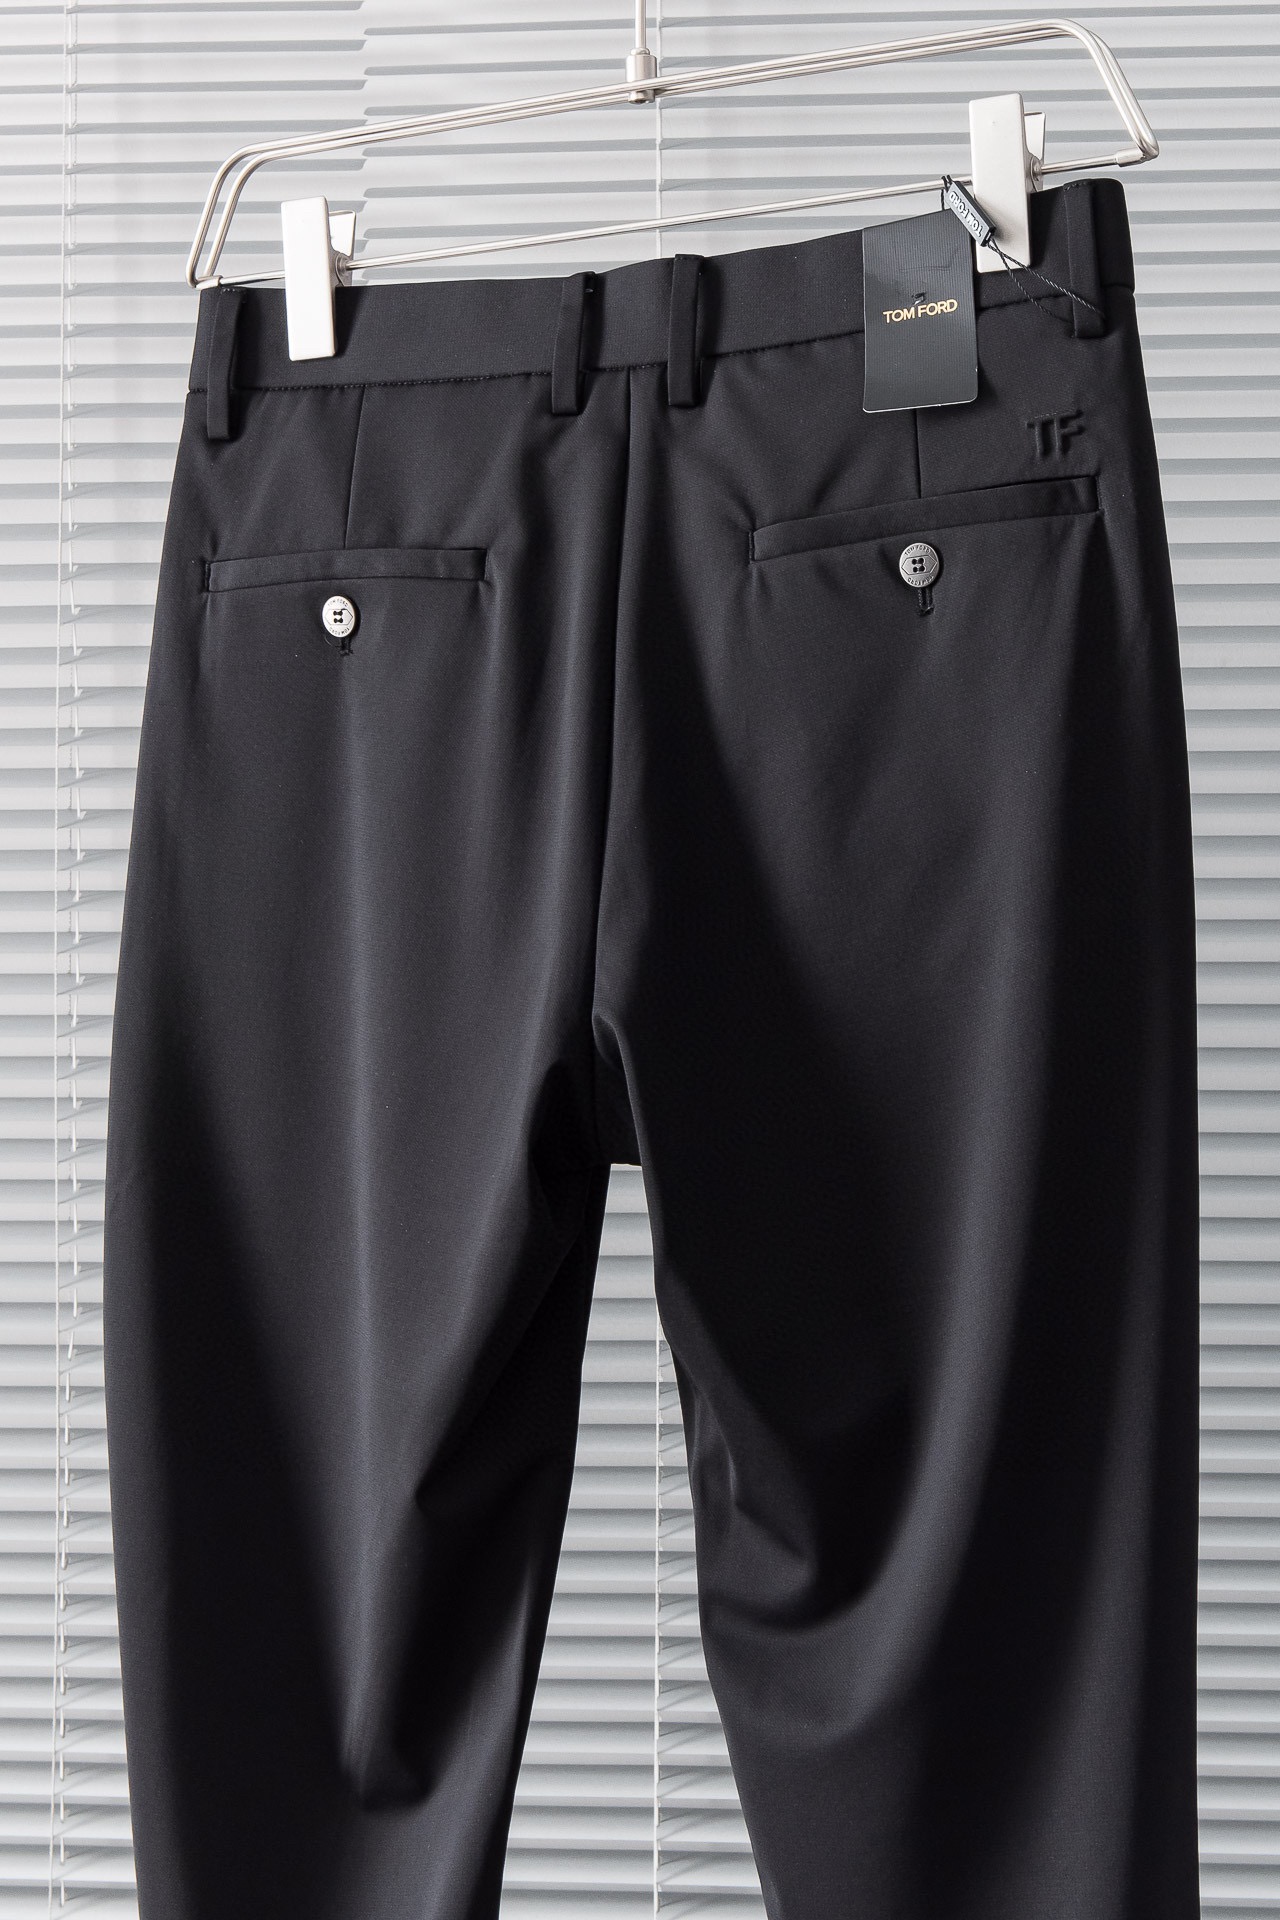 New#TF*轻奢时尚定制休闲西裤简洁干练的风格精致卓越的品质男装每款的设计点跟舒适度都能做到平衡刚刚上